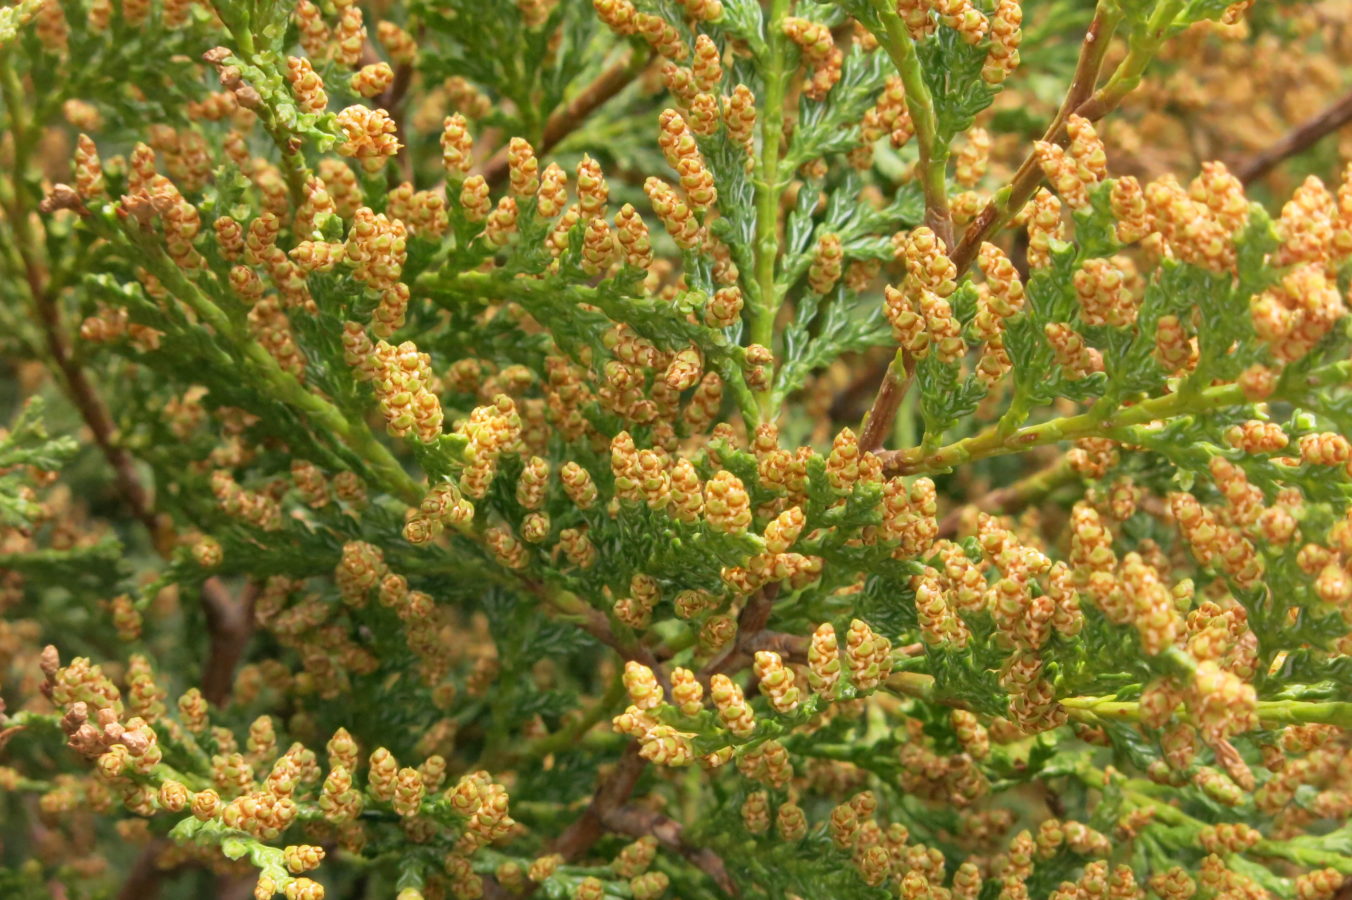 Male pollen cones